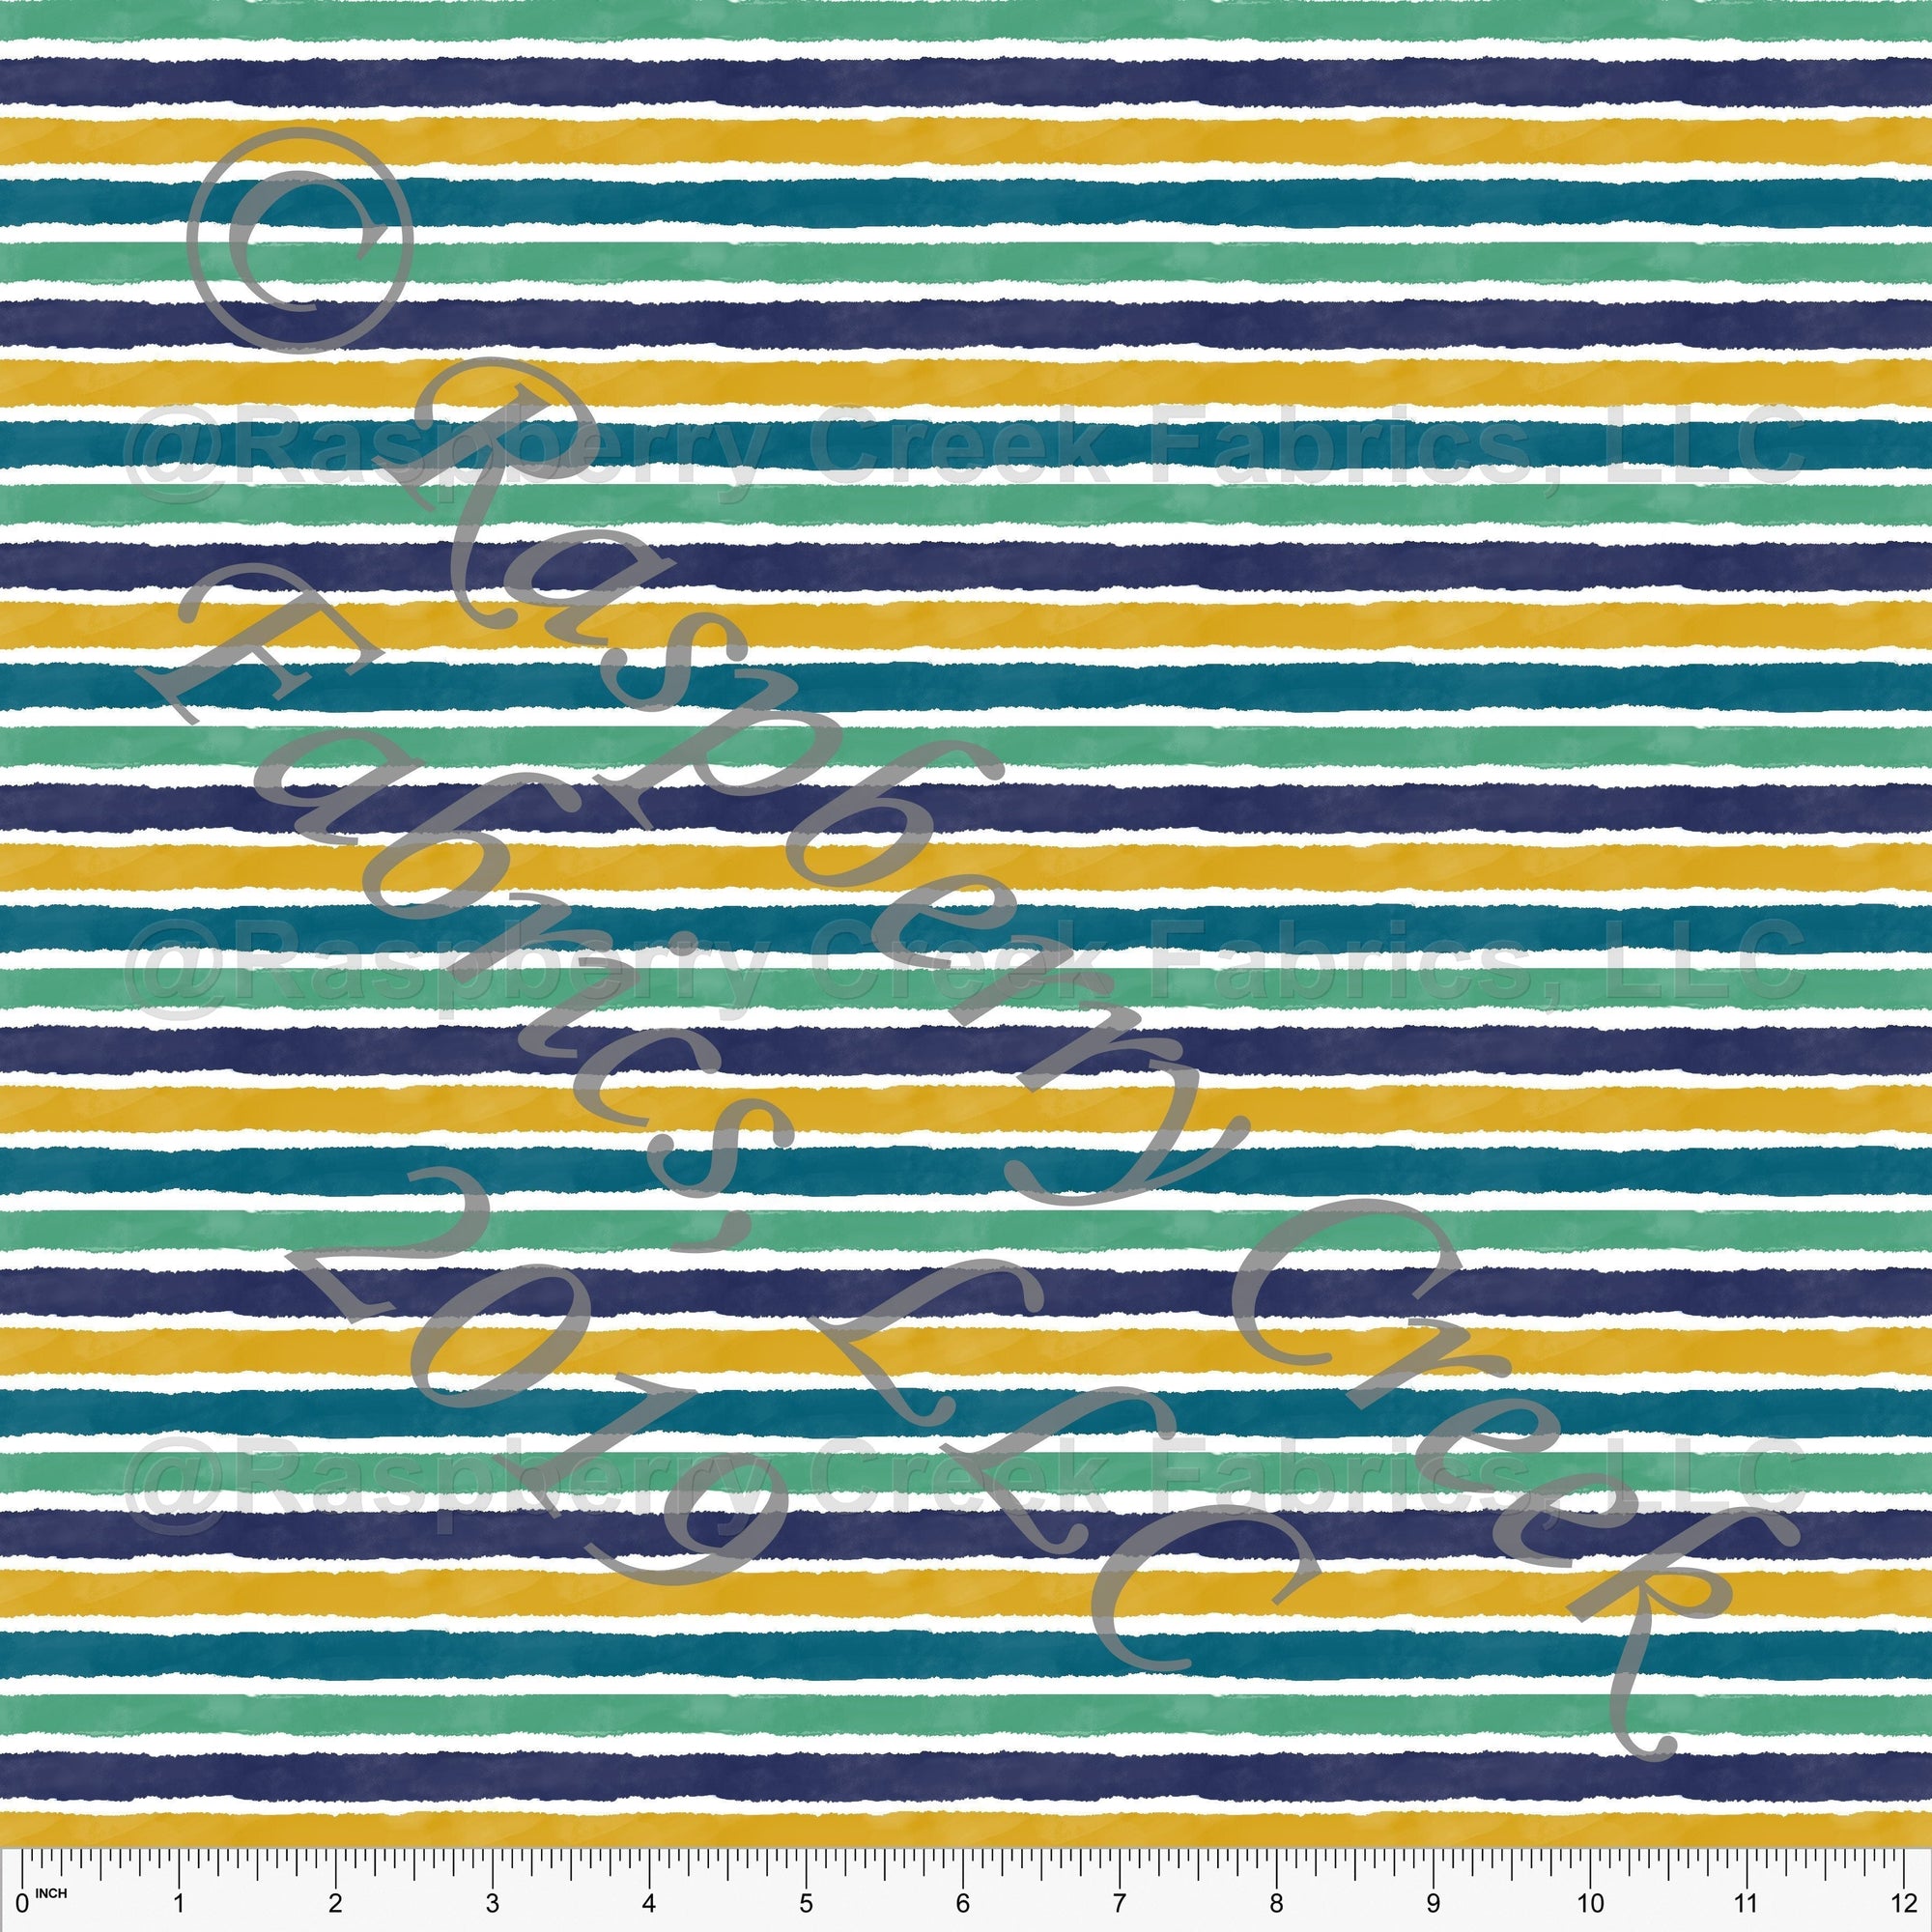 Teal Navy Mustard and Seafoam Multi Watercolor Stripe, Club Fabrics Fabric, Raspberry Creek Fabrics, watermarked